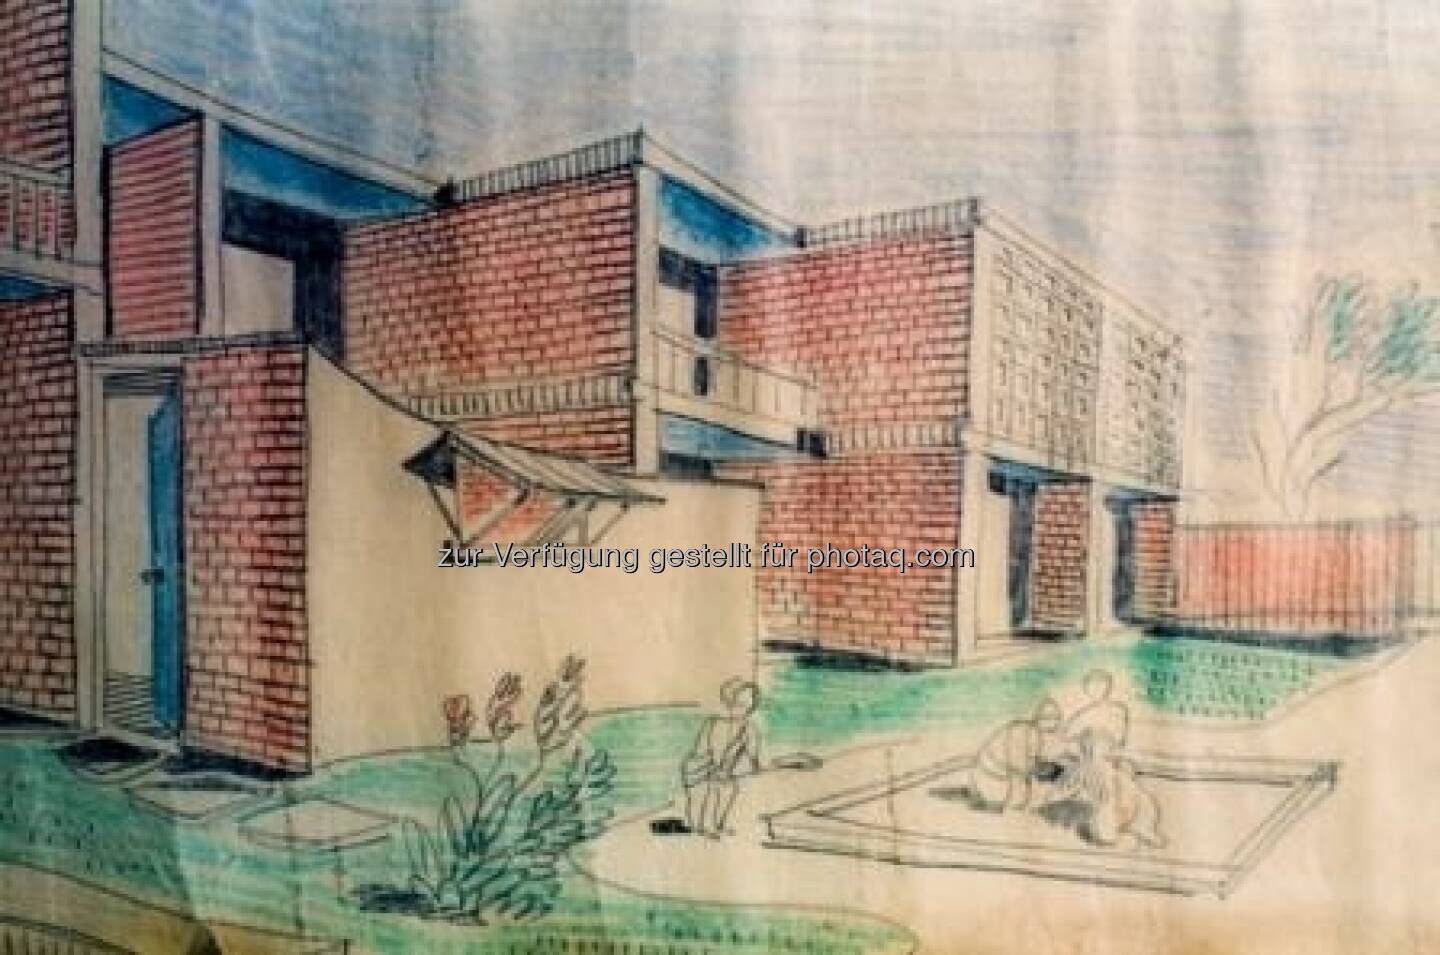 Chandigarh - Studienprojekt Wohnblock, Stadtverwaltung Chandigarh